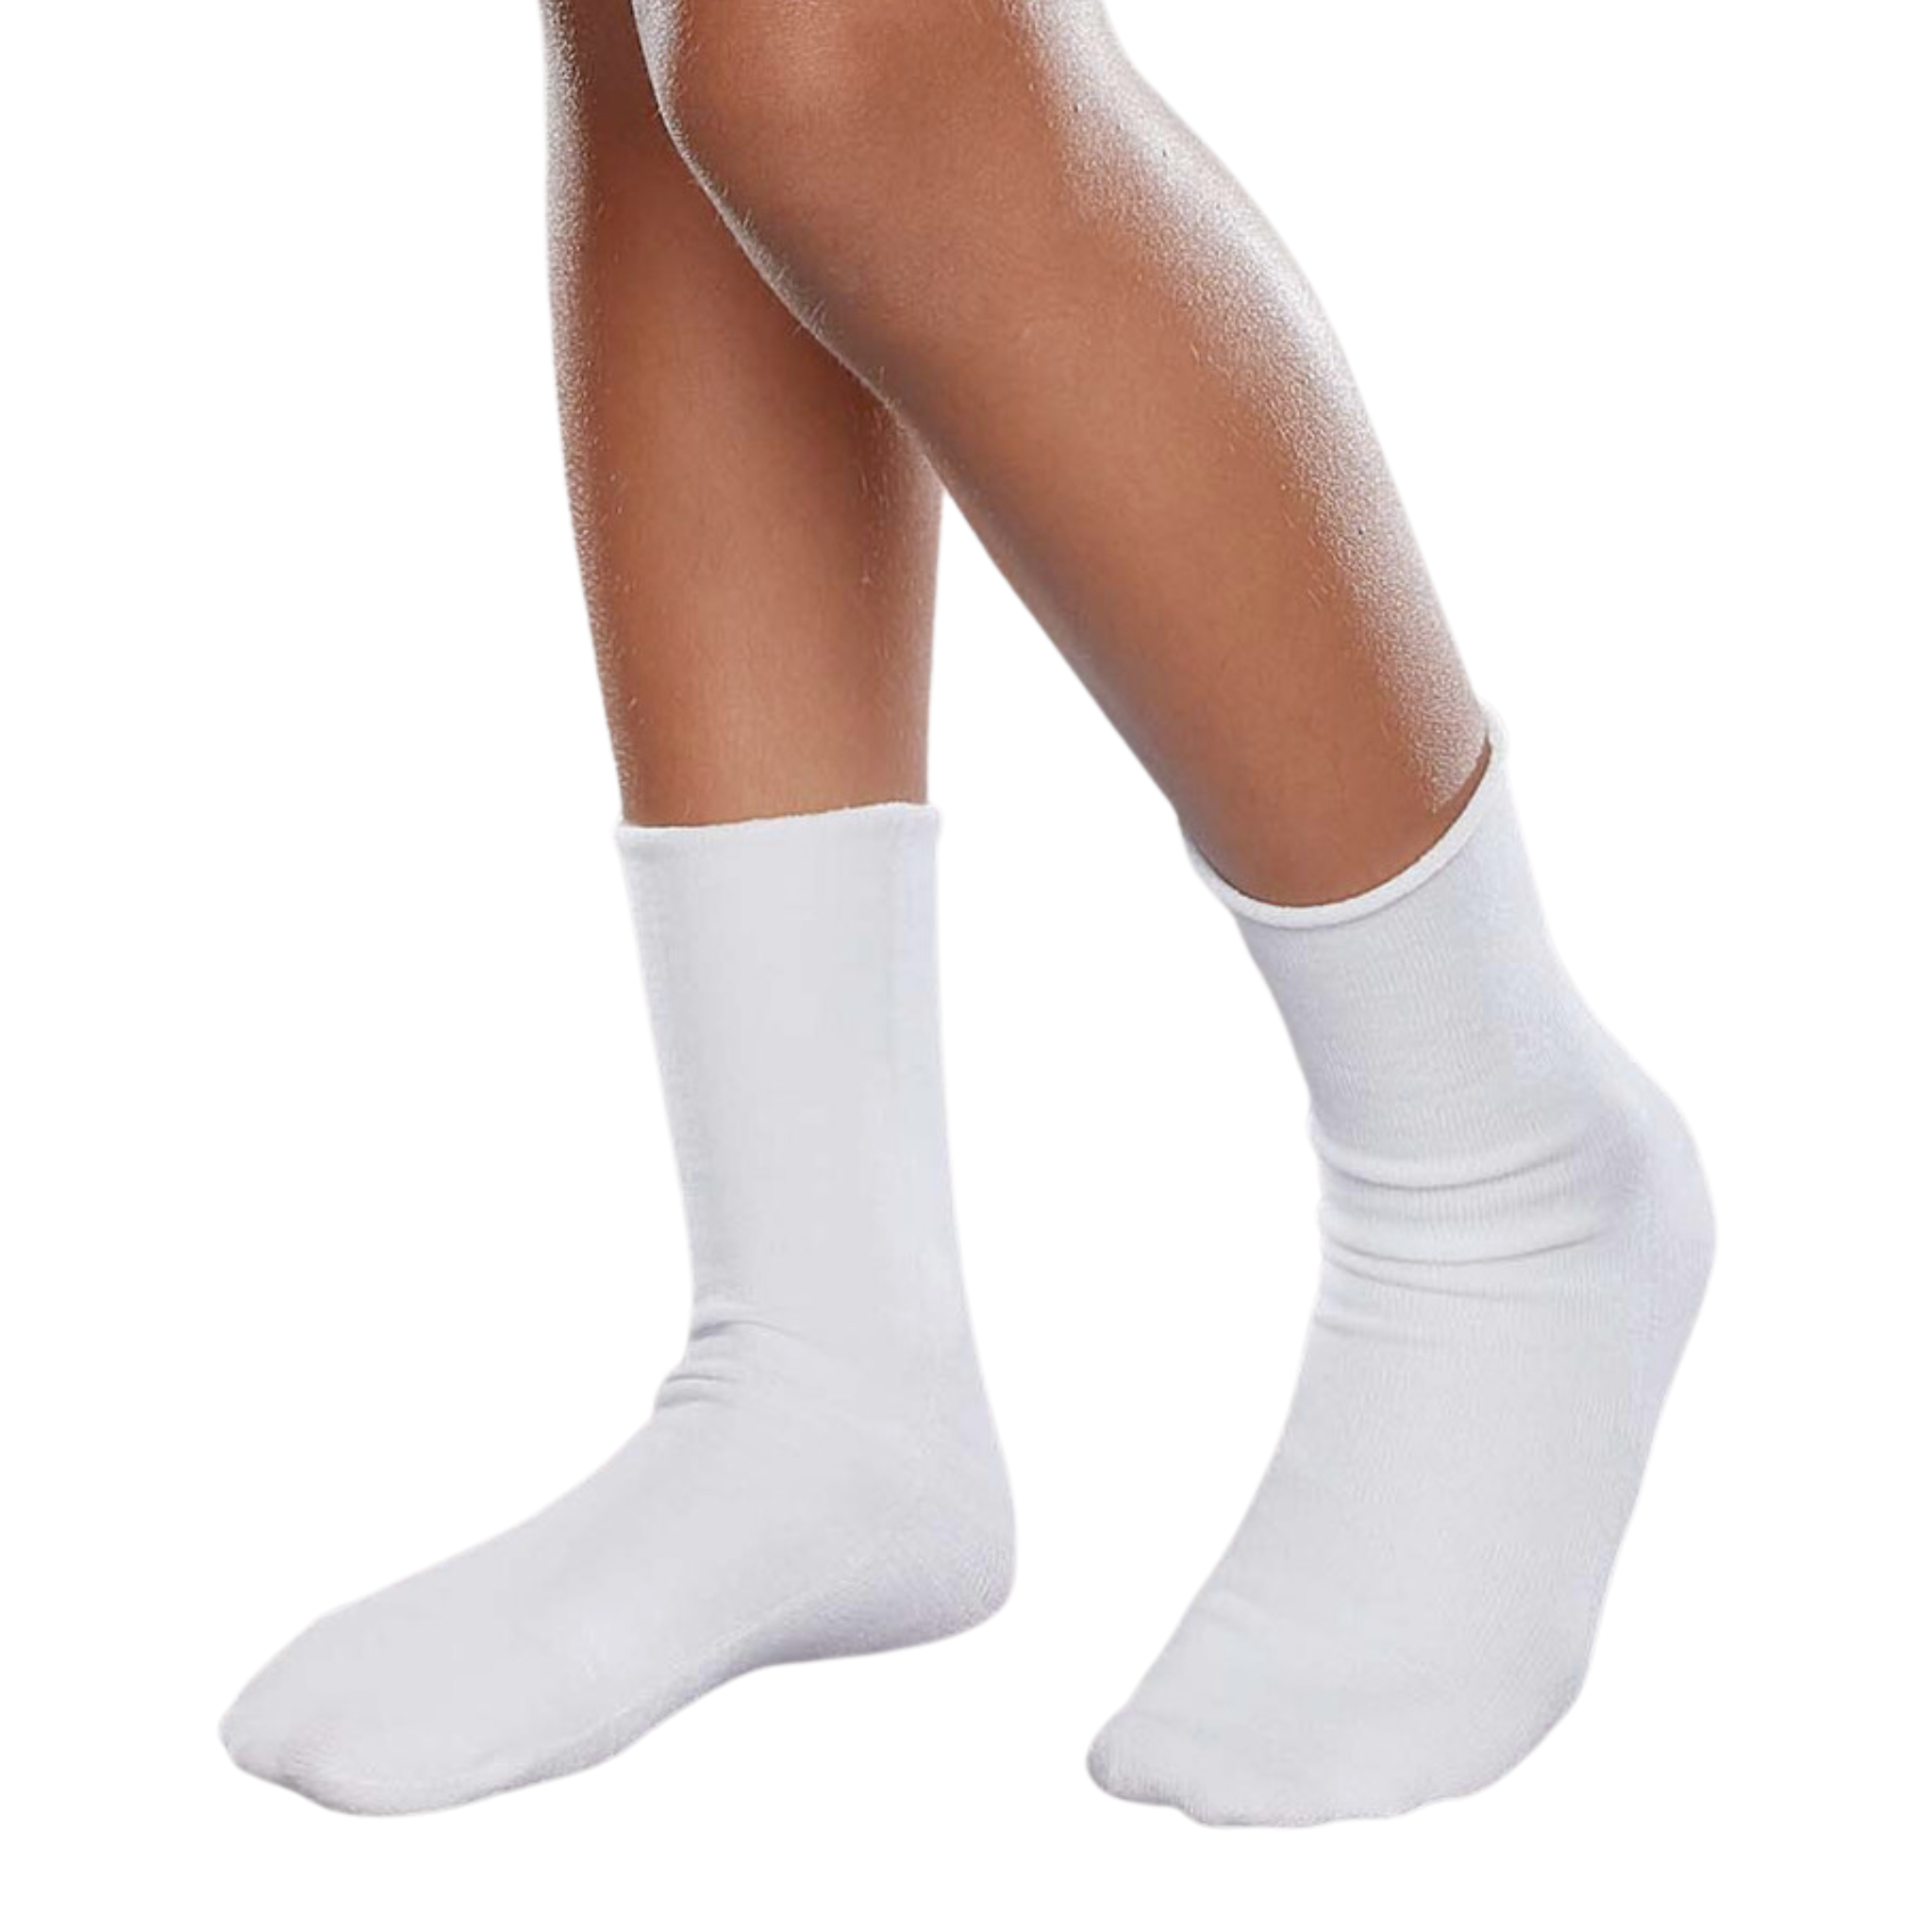 SmartKnitKIDS - Absolutely Seamless Socks - Ultimate comfort sock - Black/Grey/White - Value Packs